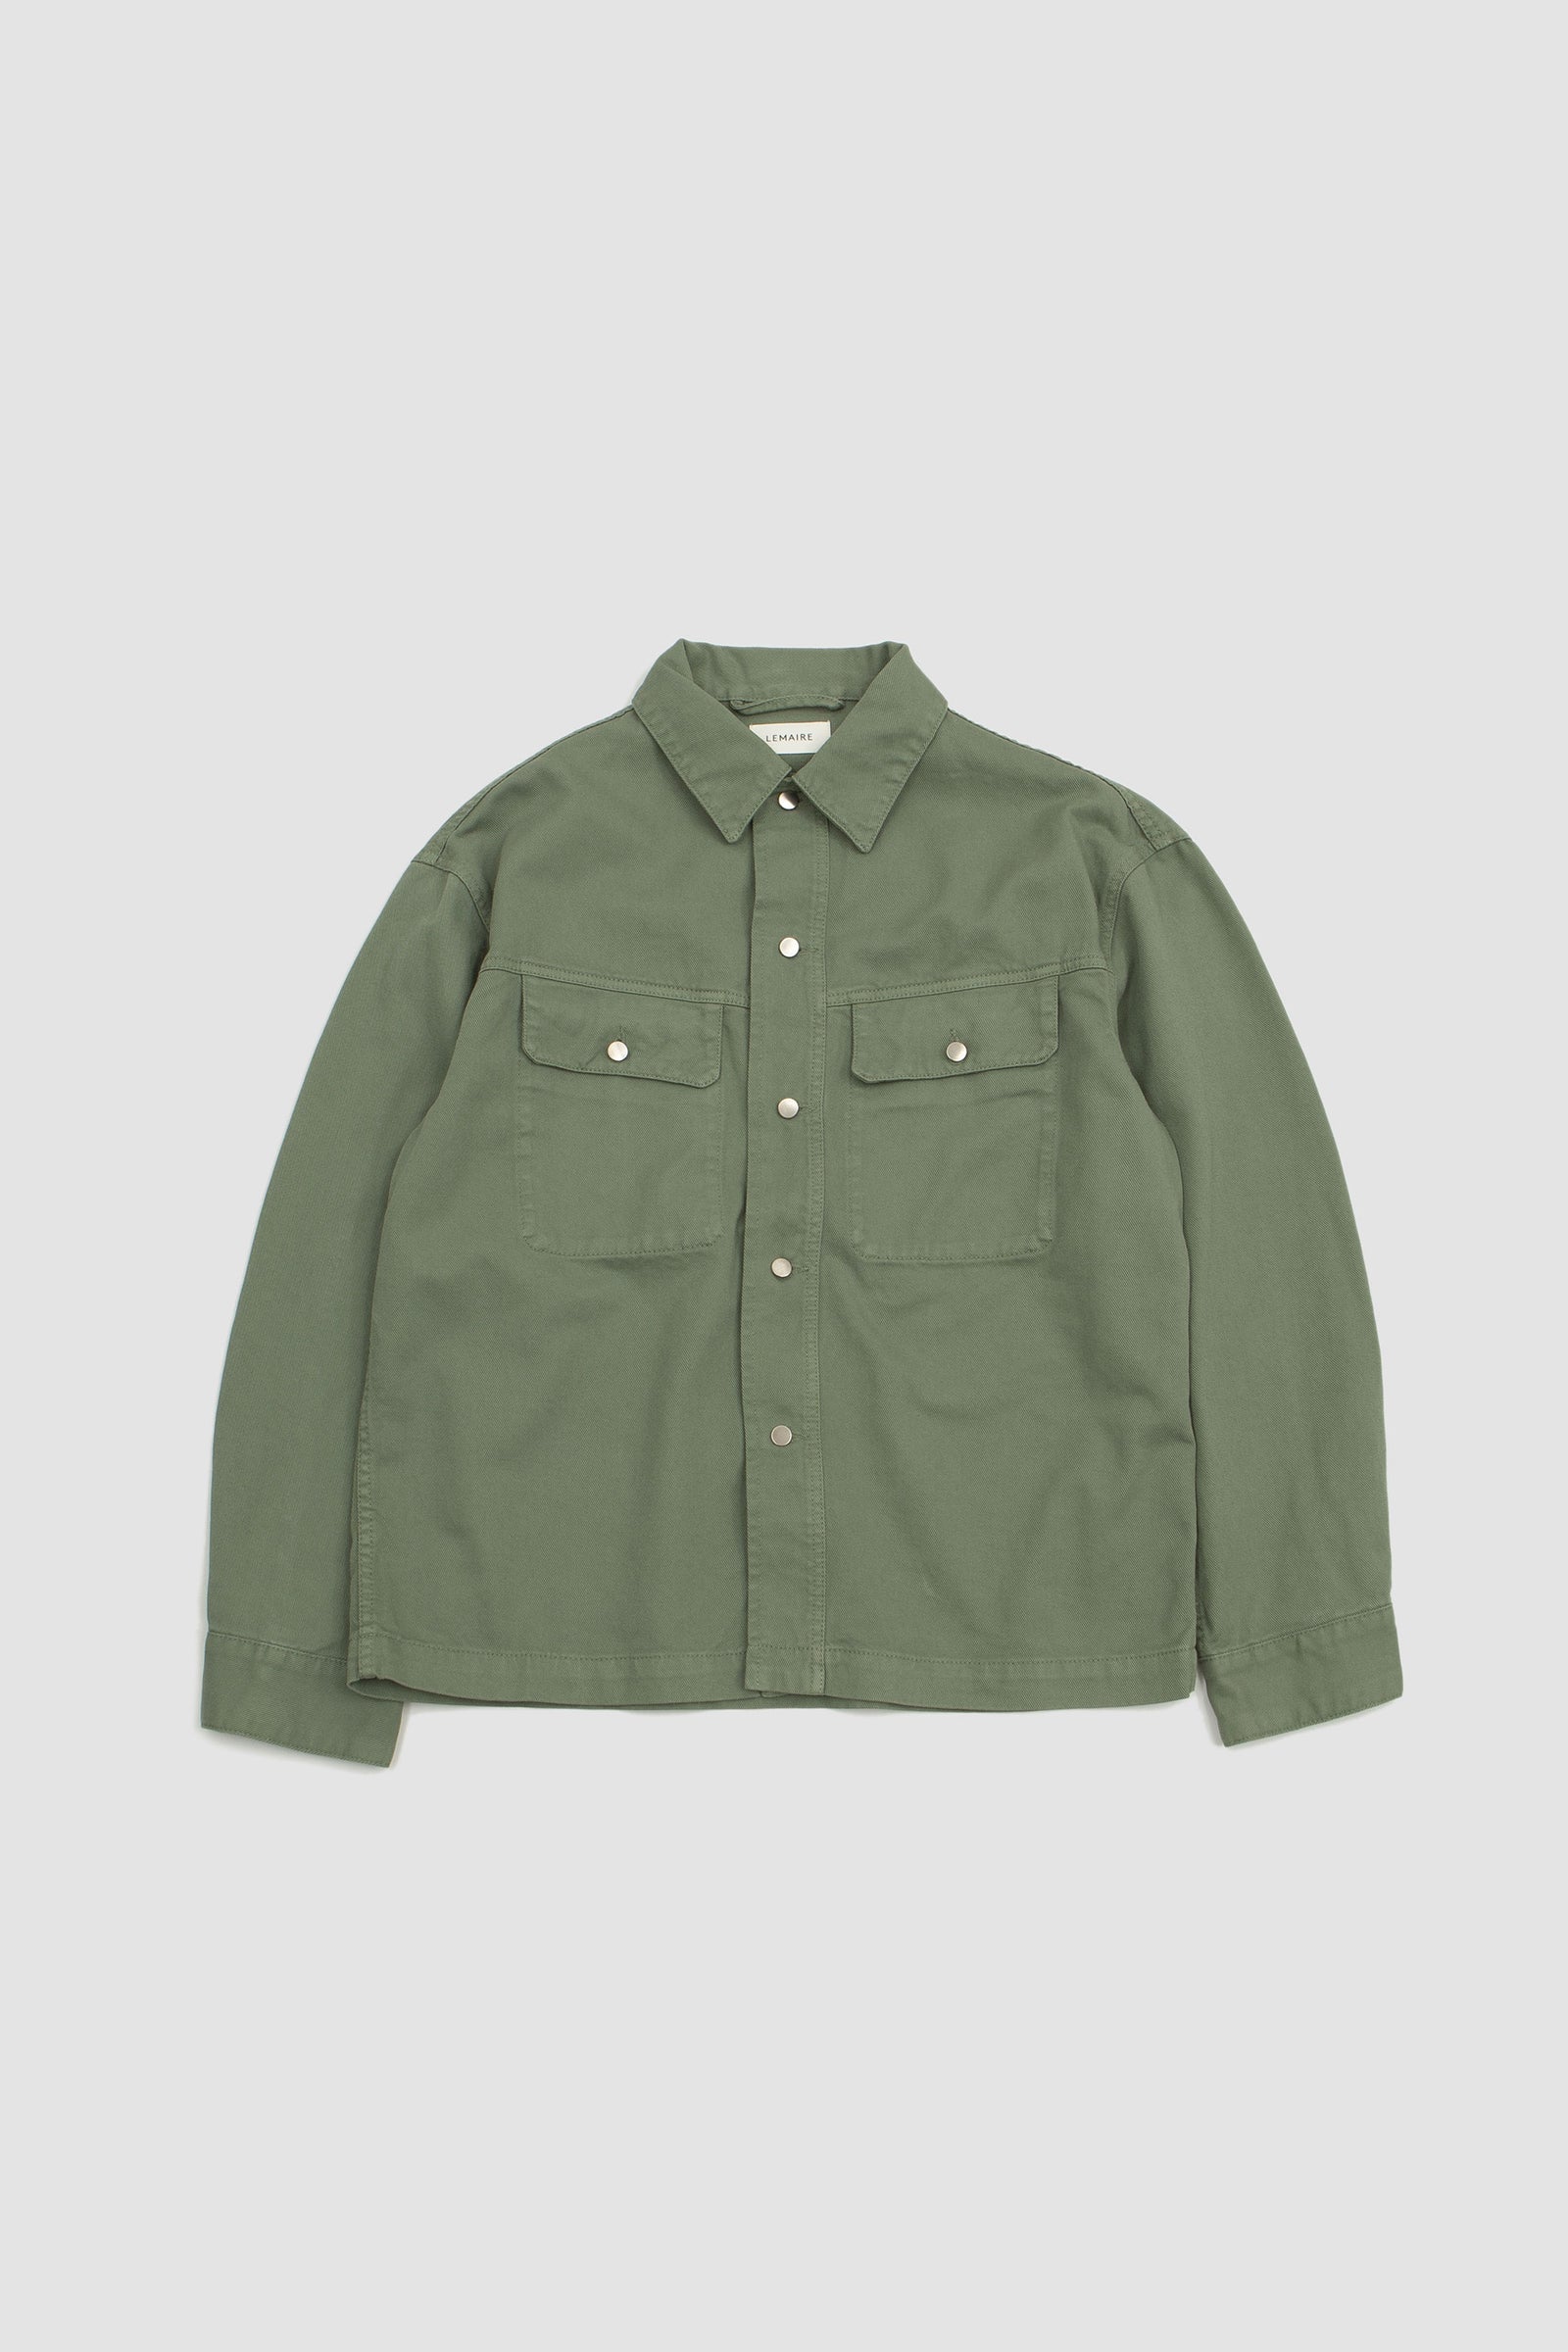 SPORTIVO [Trucker overshirt hedge green]